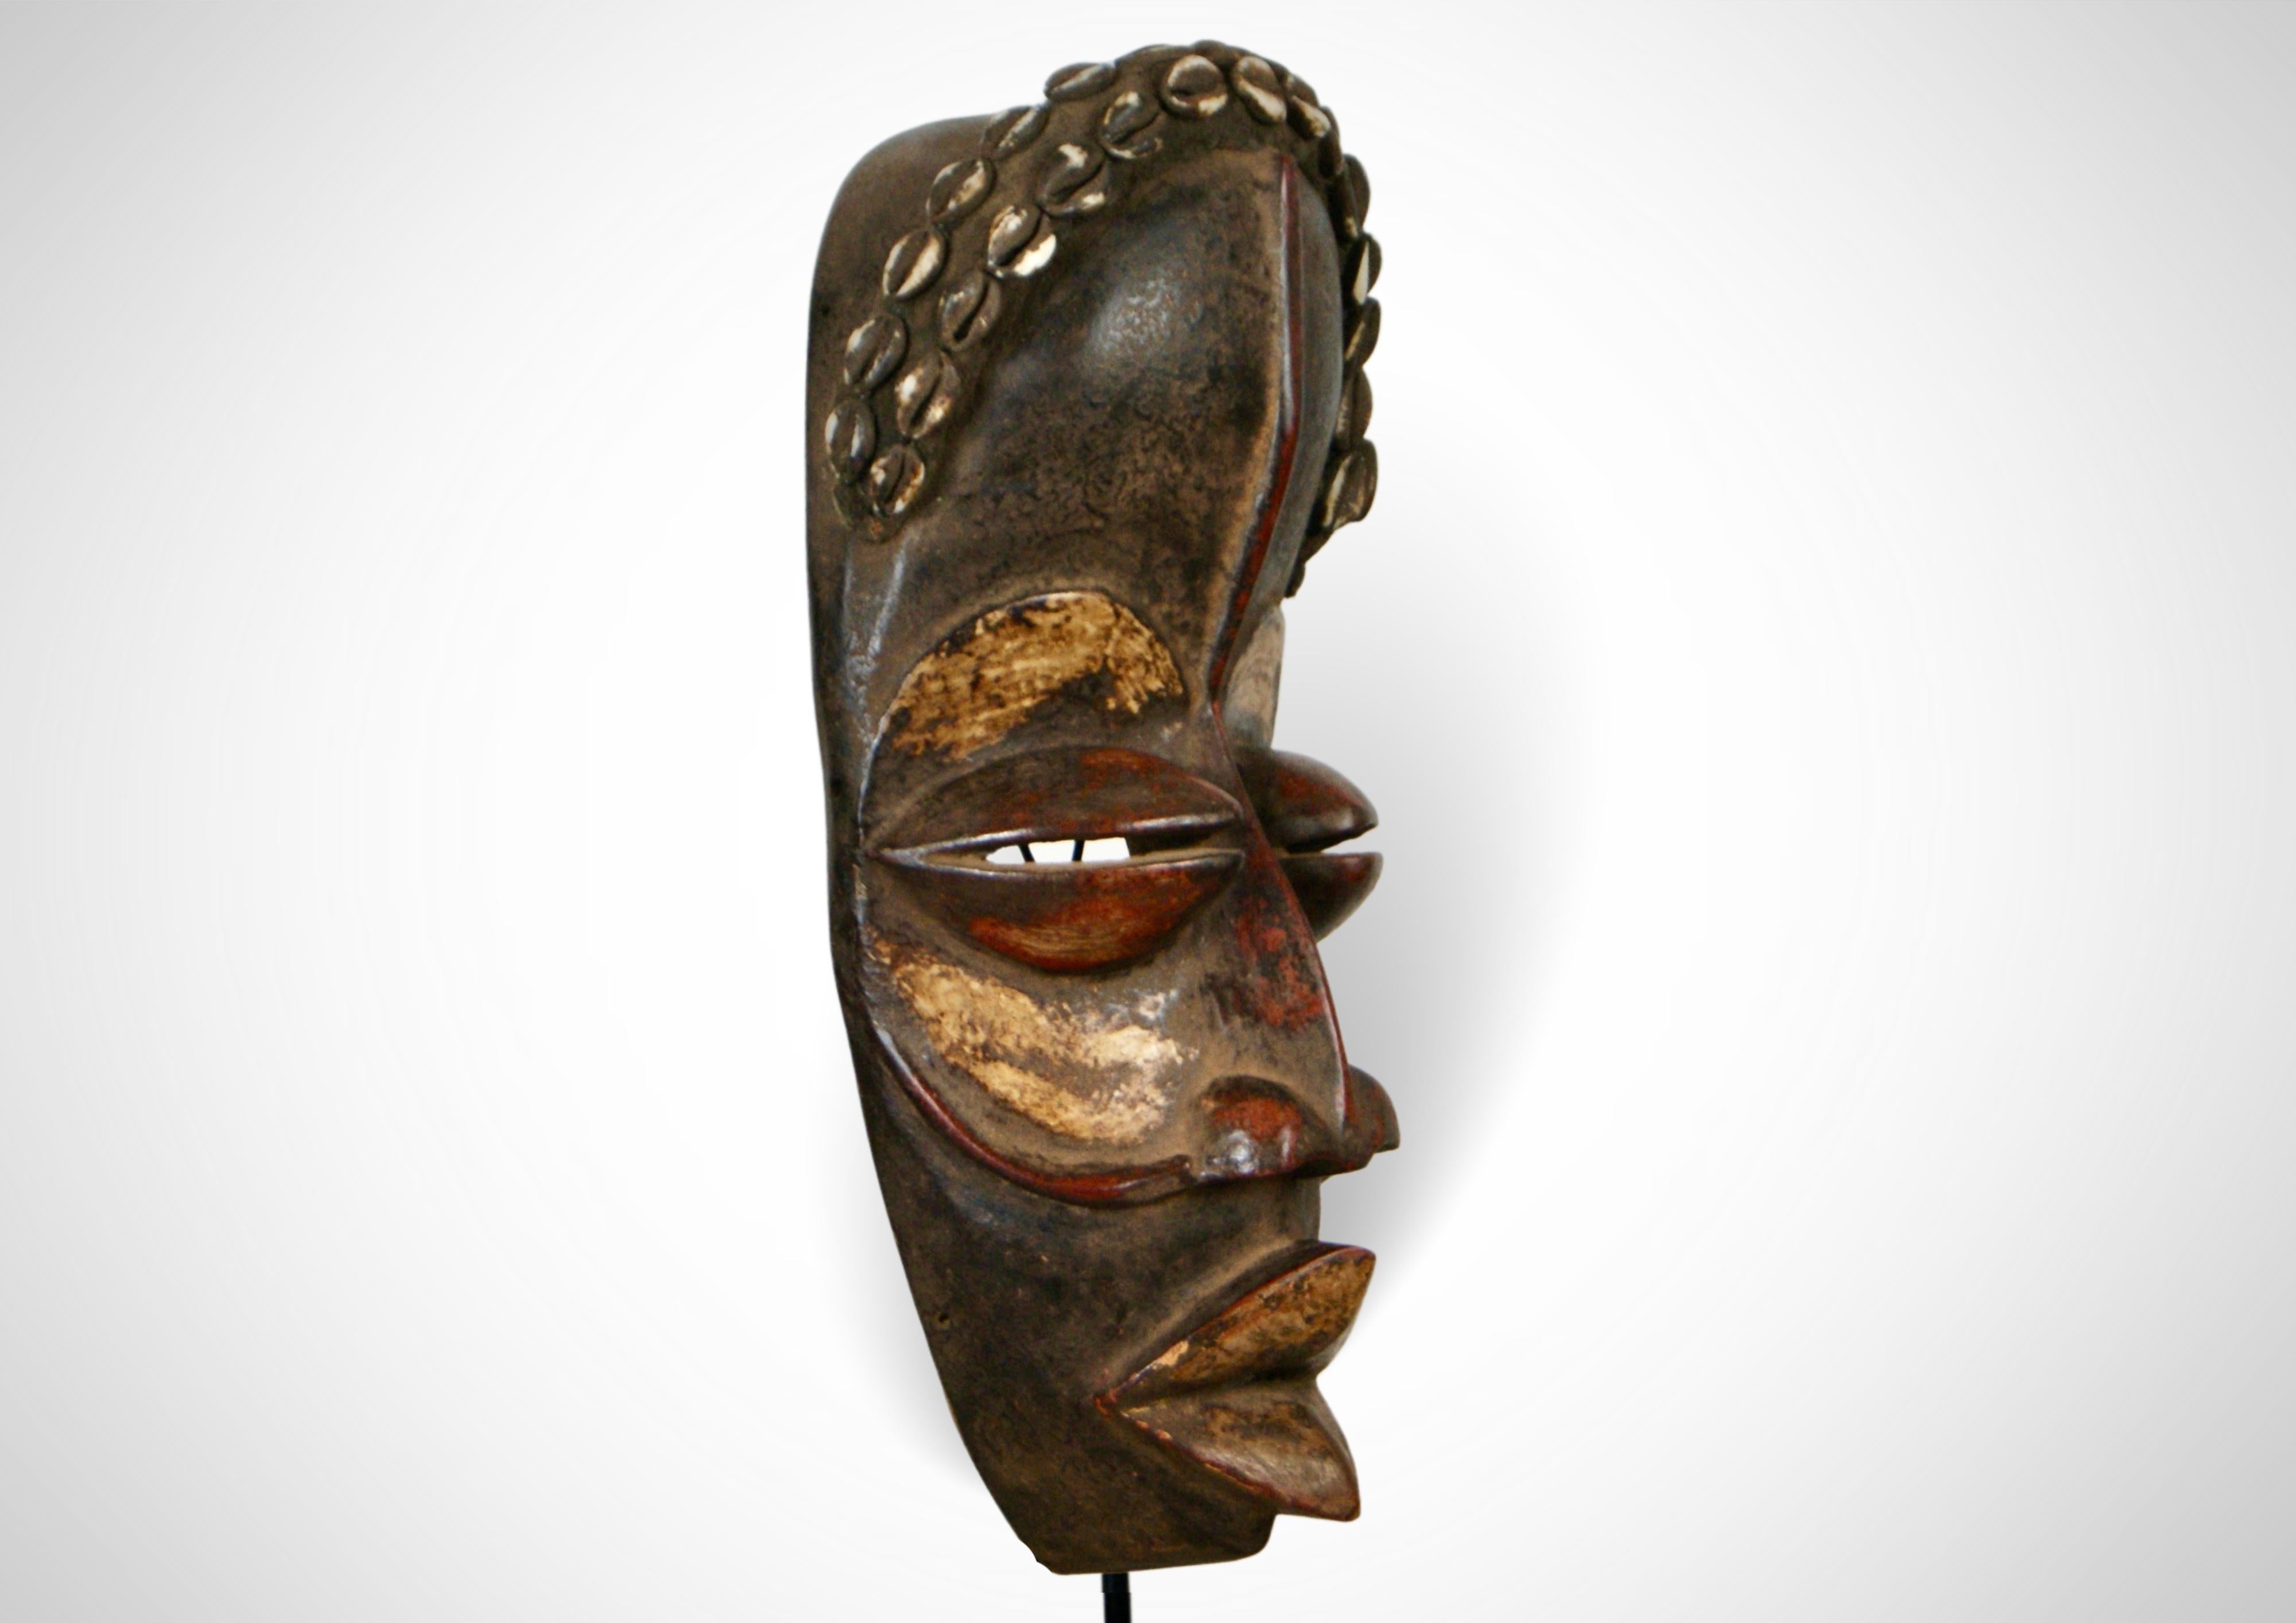 Großformatige Dan-Maske ('Deangle', 'Dan Gle') aus Côte d'Ivoire W.Affrica, um Anfang des 20. Jahrhunderts.
 
Für das Volk der Dan verkörpert der 